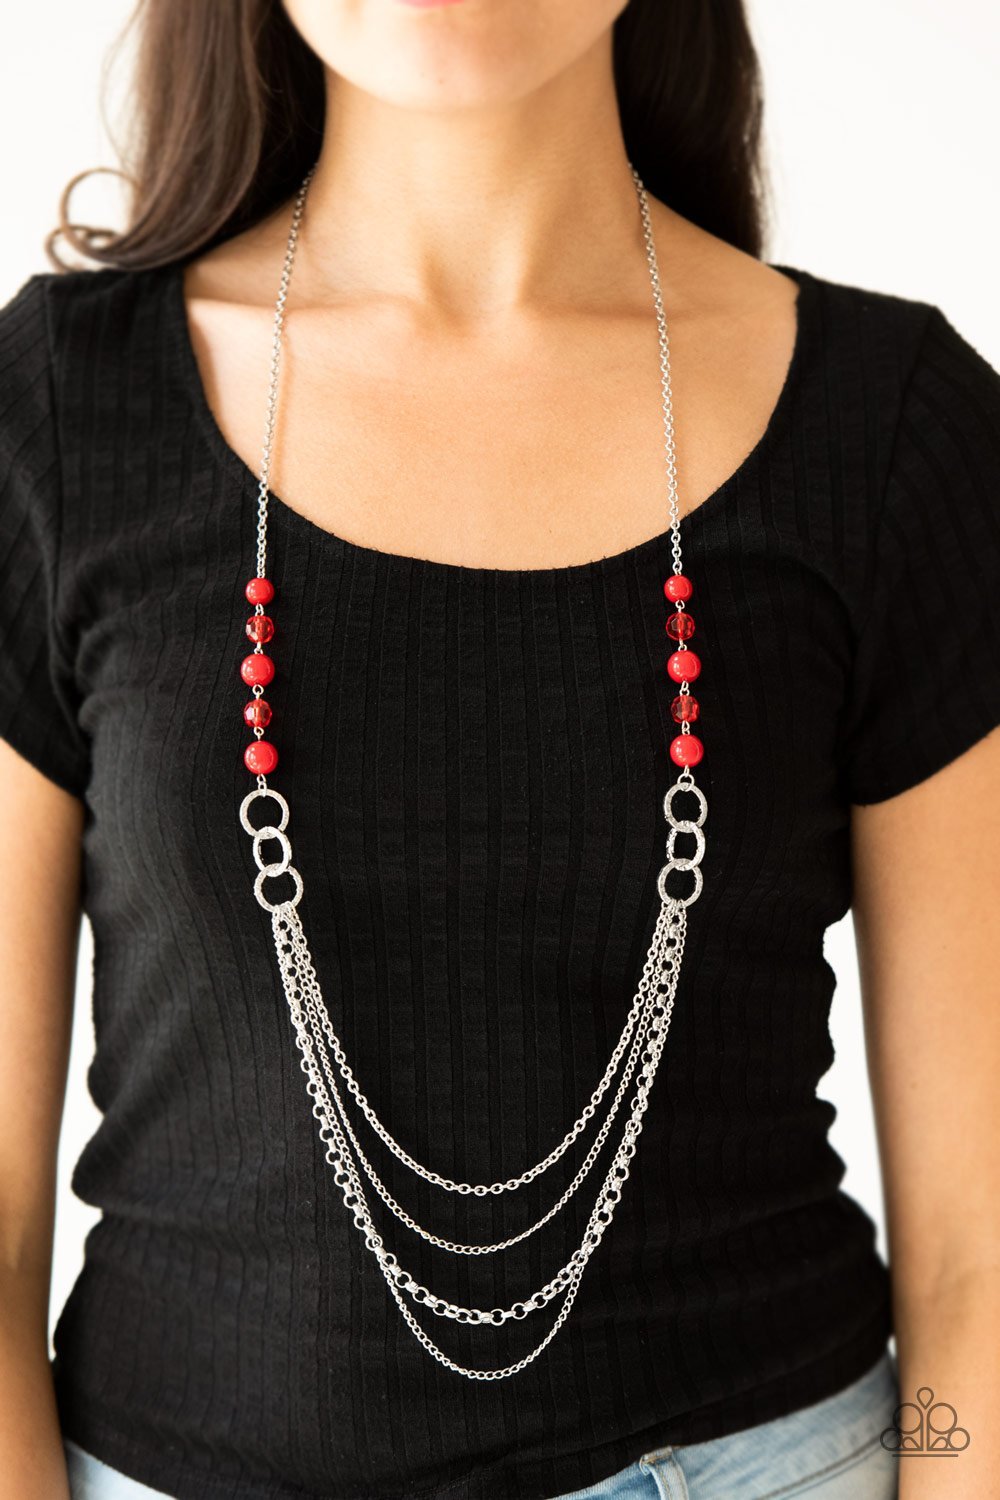 Vividly Vivid - red necklace